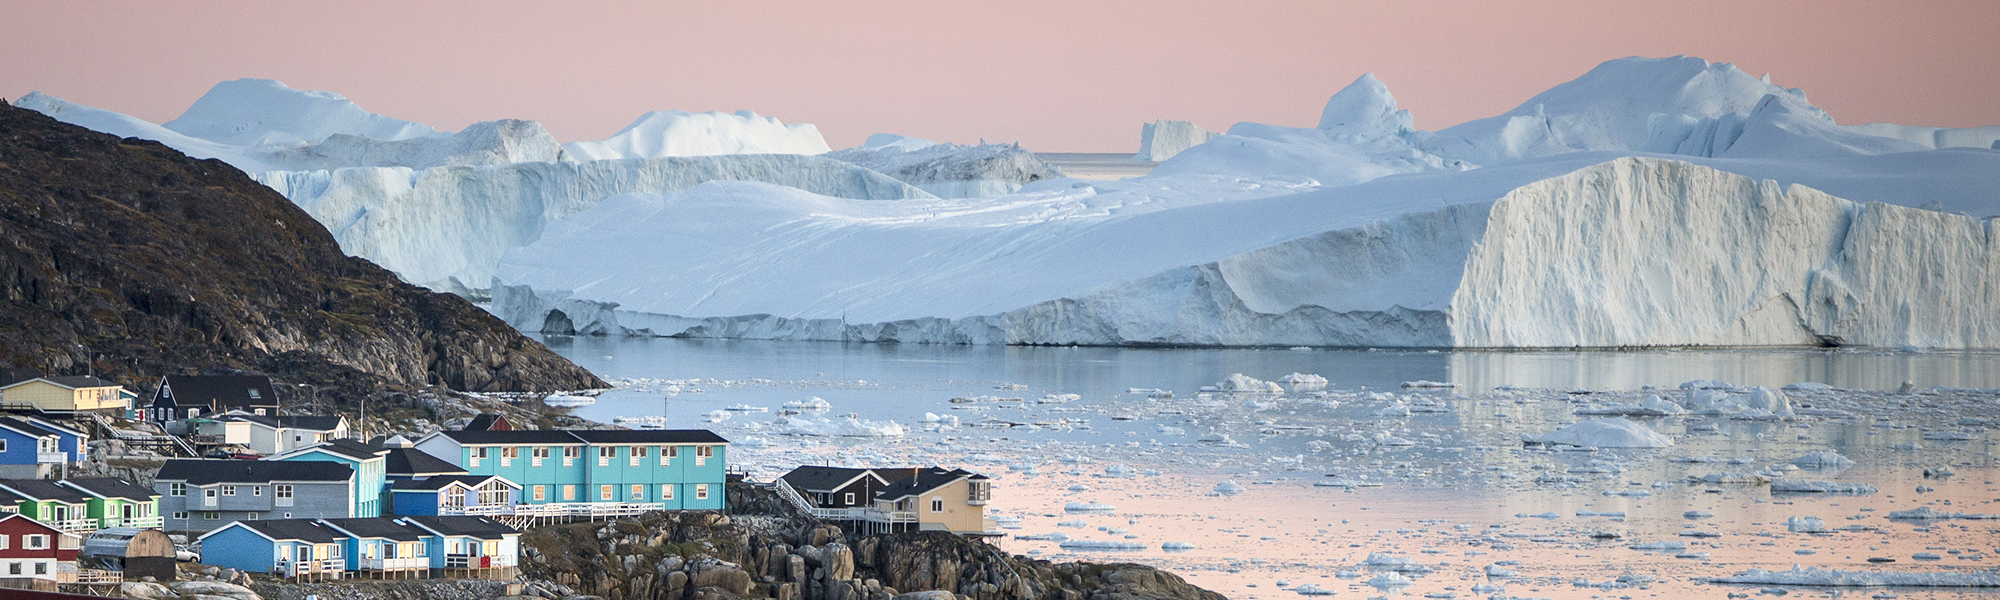 Découverte Baie de Disko © Mads Pihl - Visit-Greenland